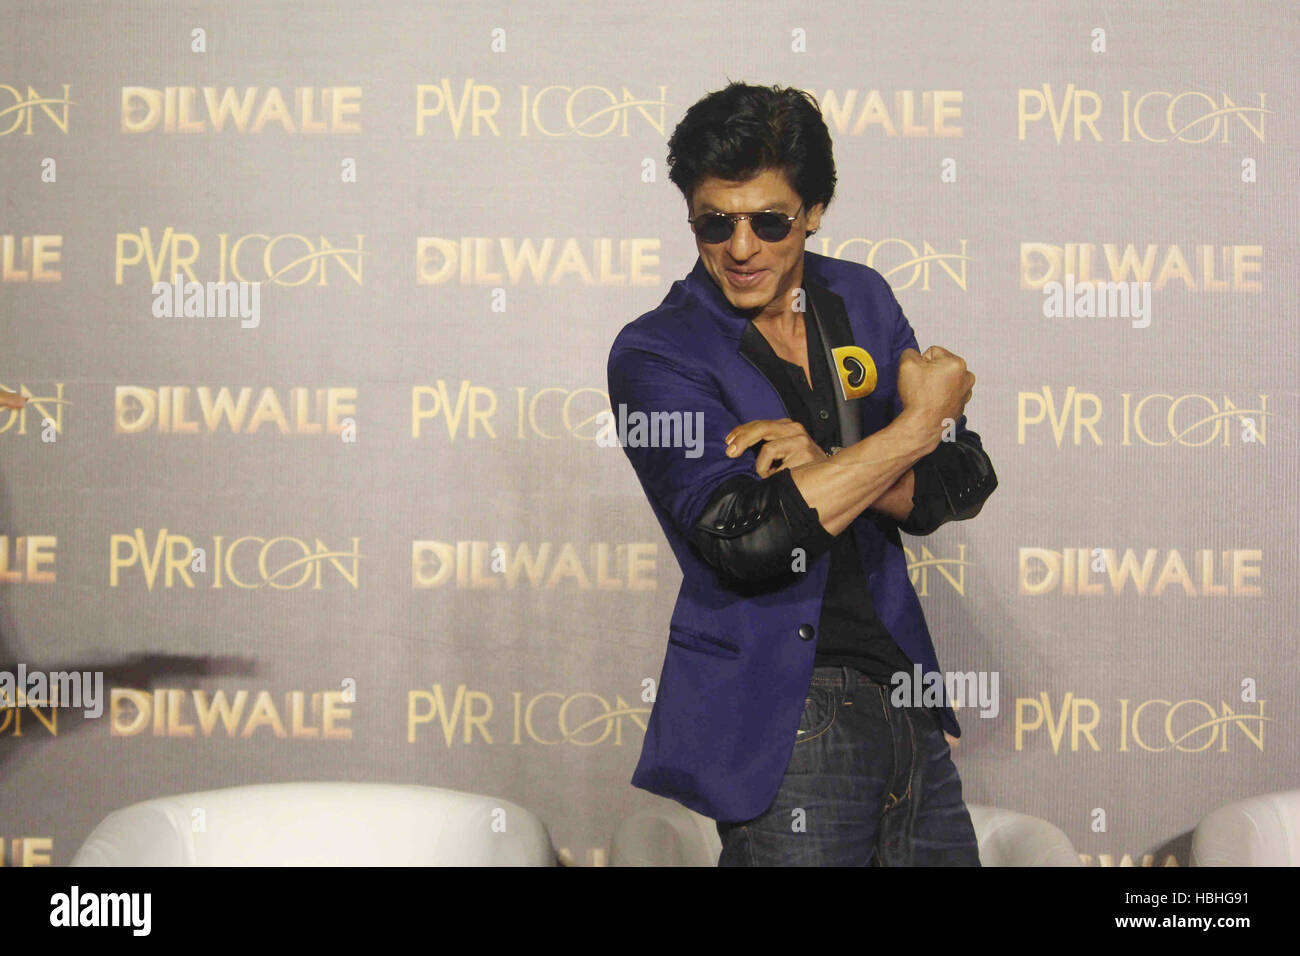 Shah Rukh Khan Dancing, attore indiano Bollywood al lancio del film Dilwale a Mumbai, India Foto Stock